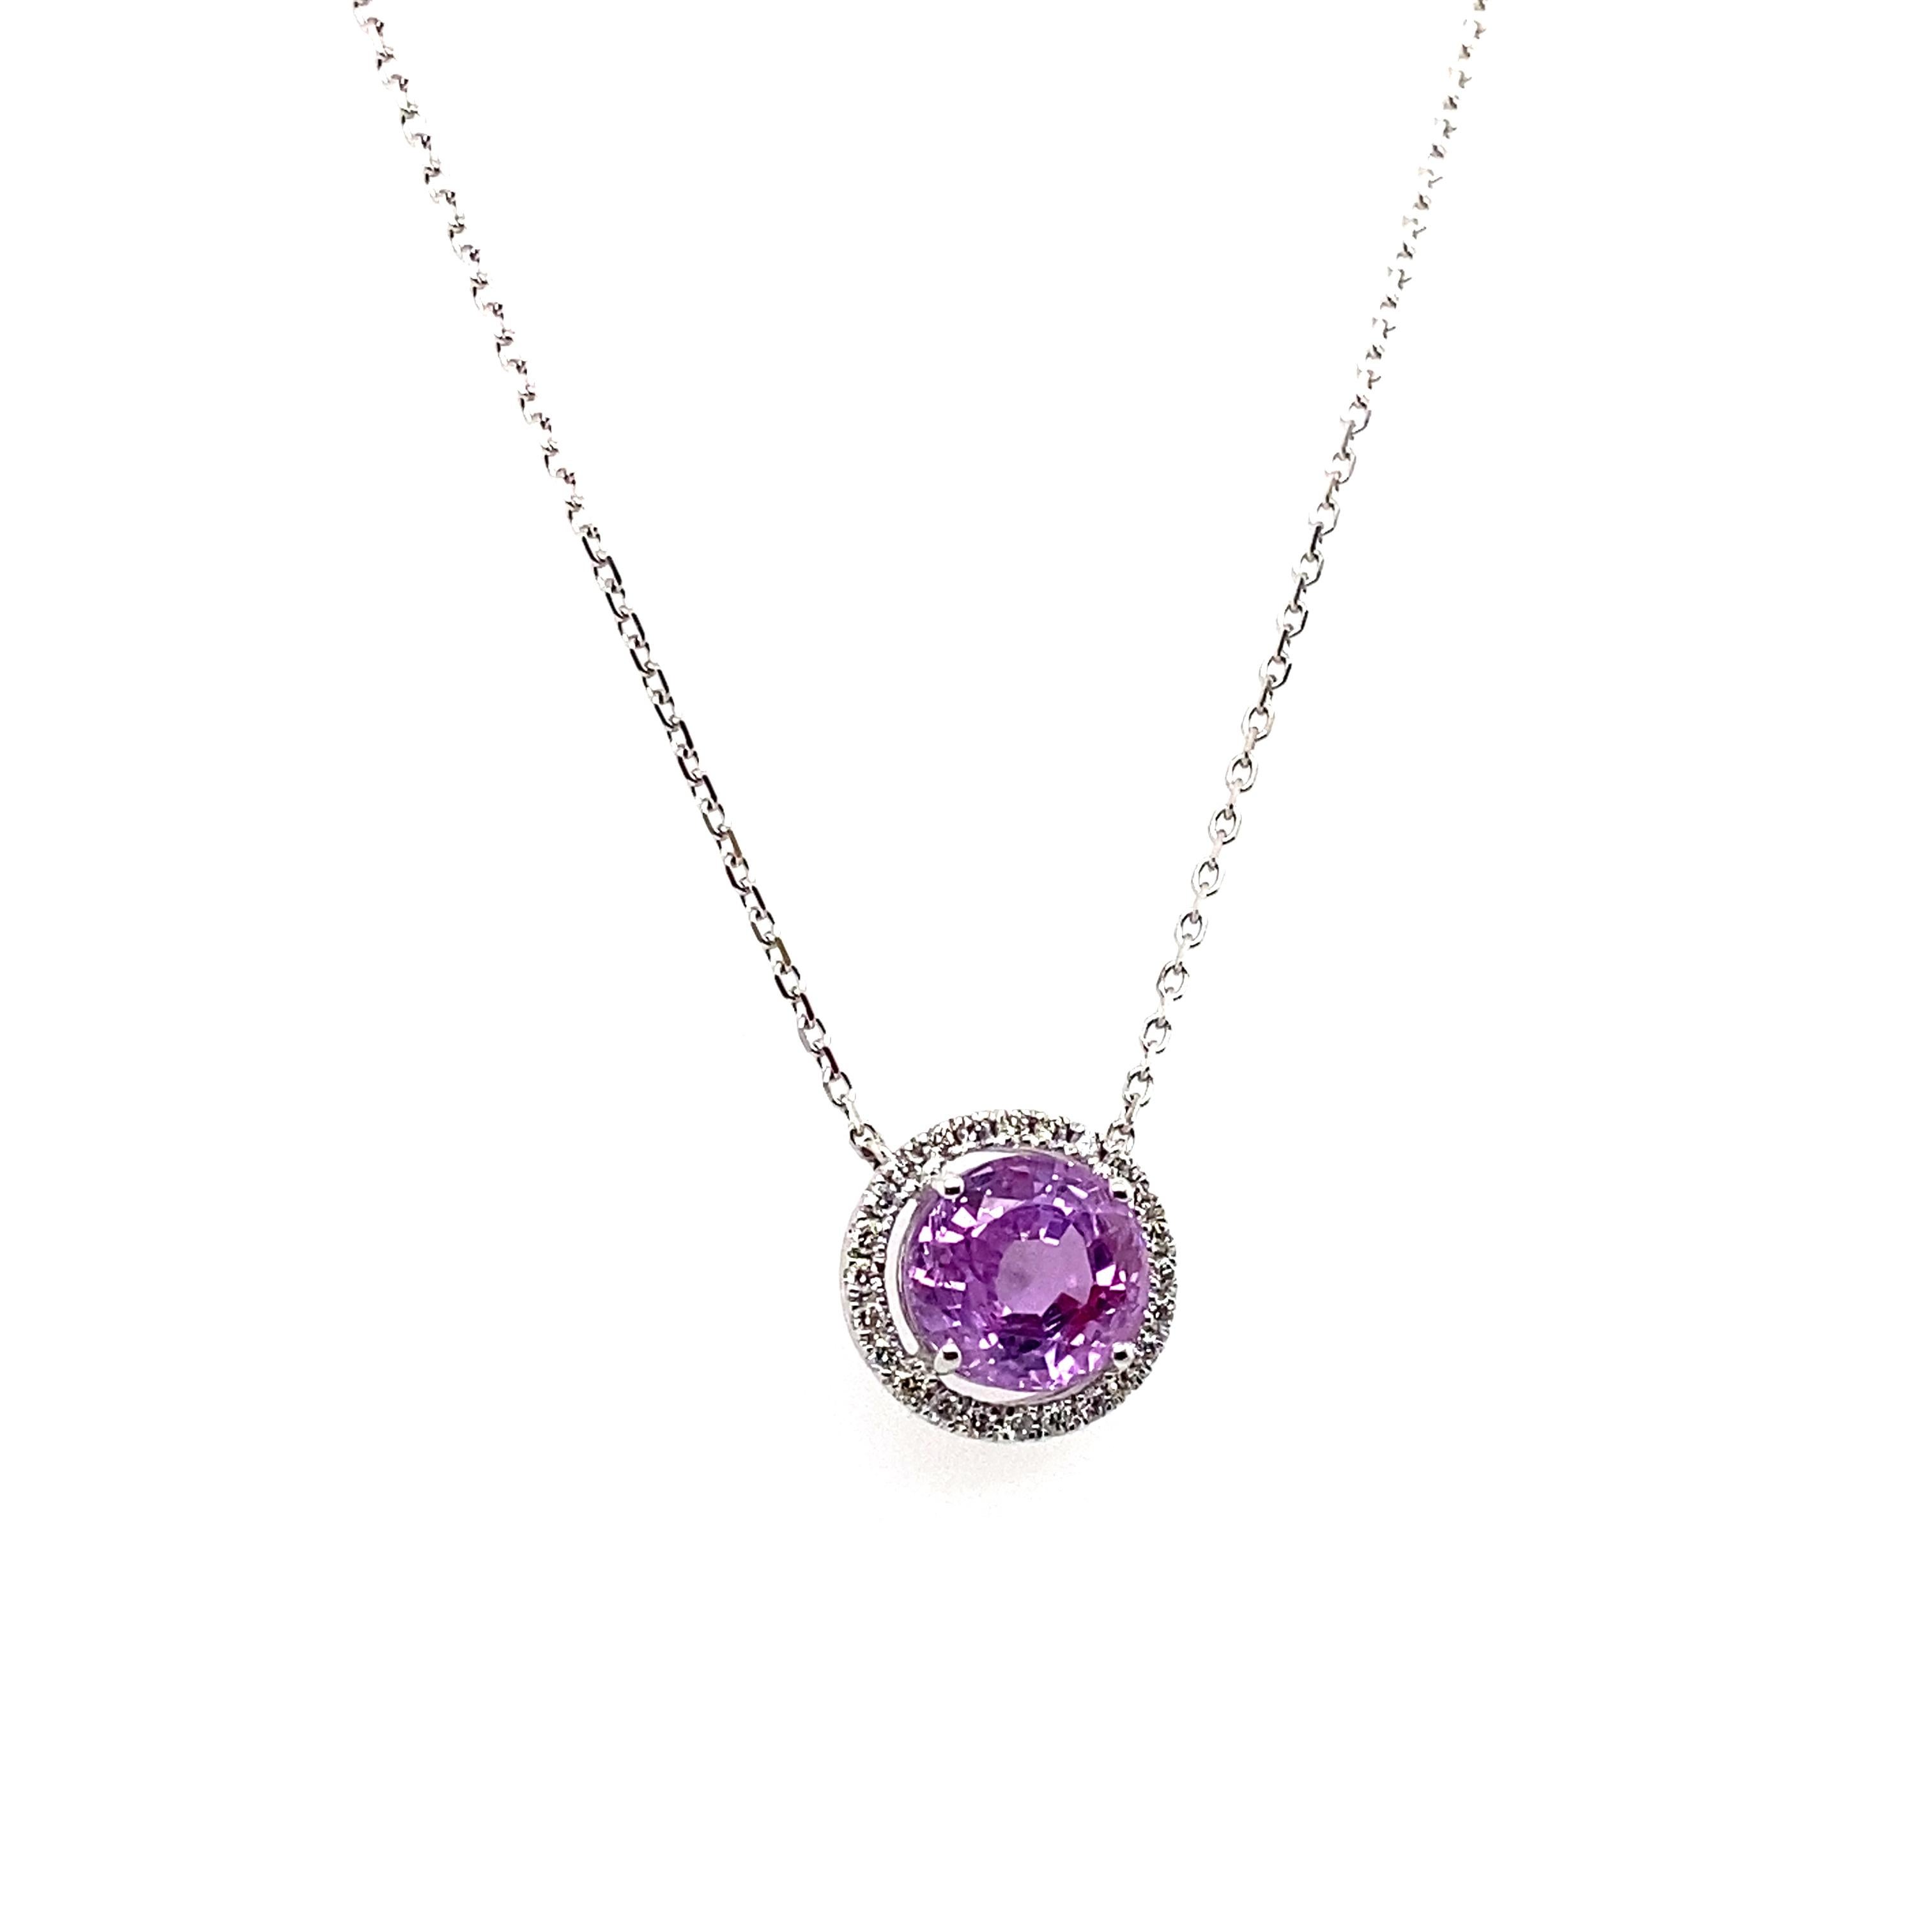 Contemporary 3.07Carat No Heat Purple Sapphire and Diamond Pendant Necklace For Sale